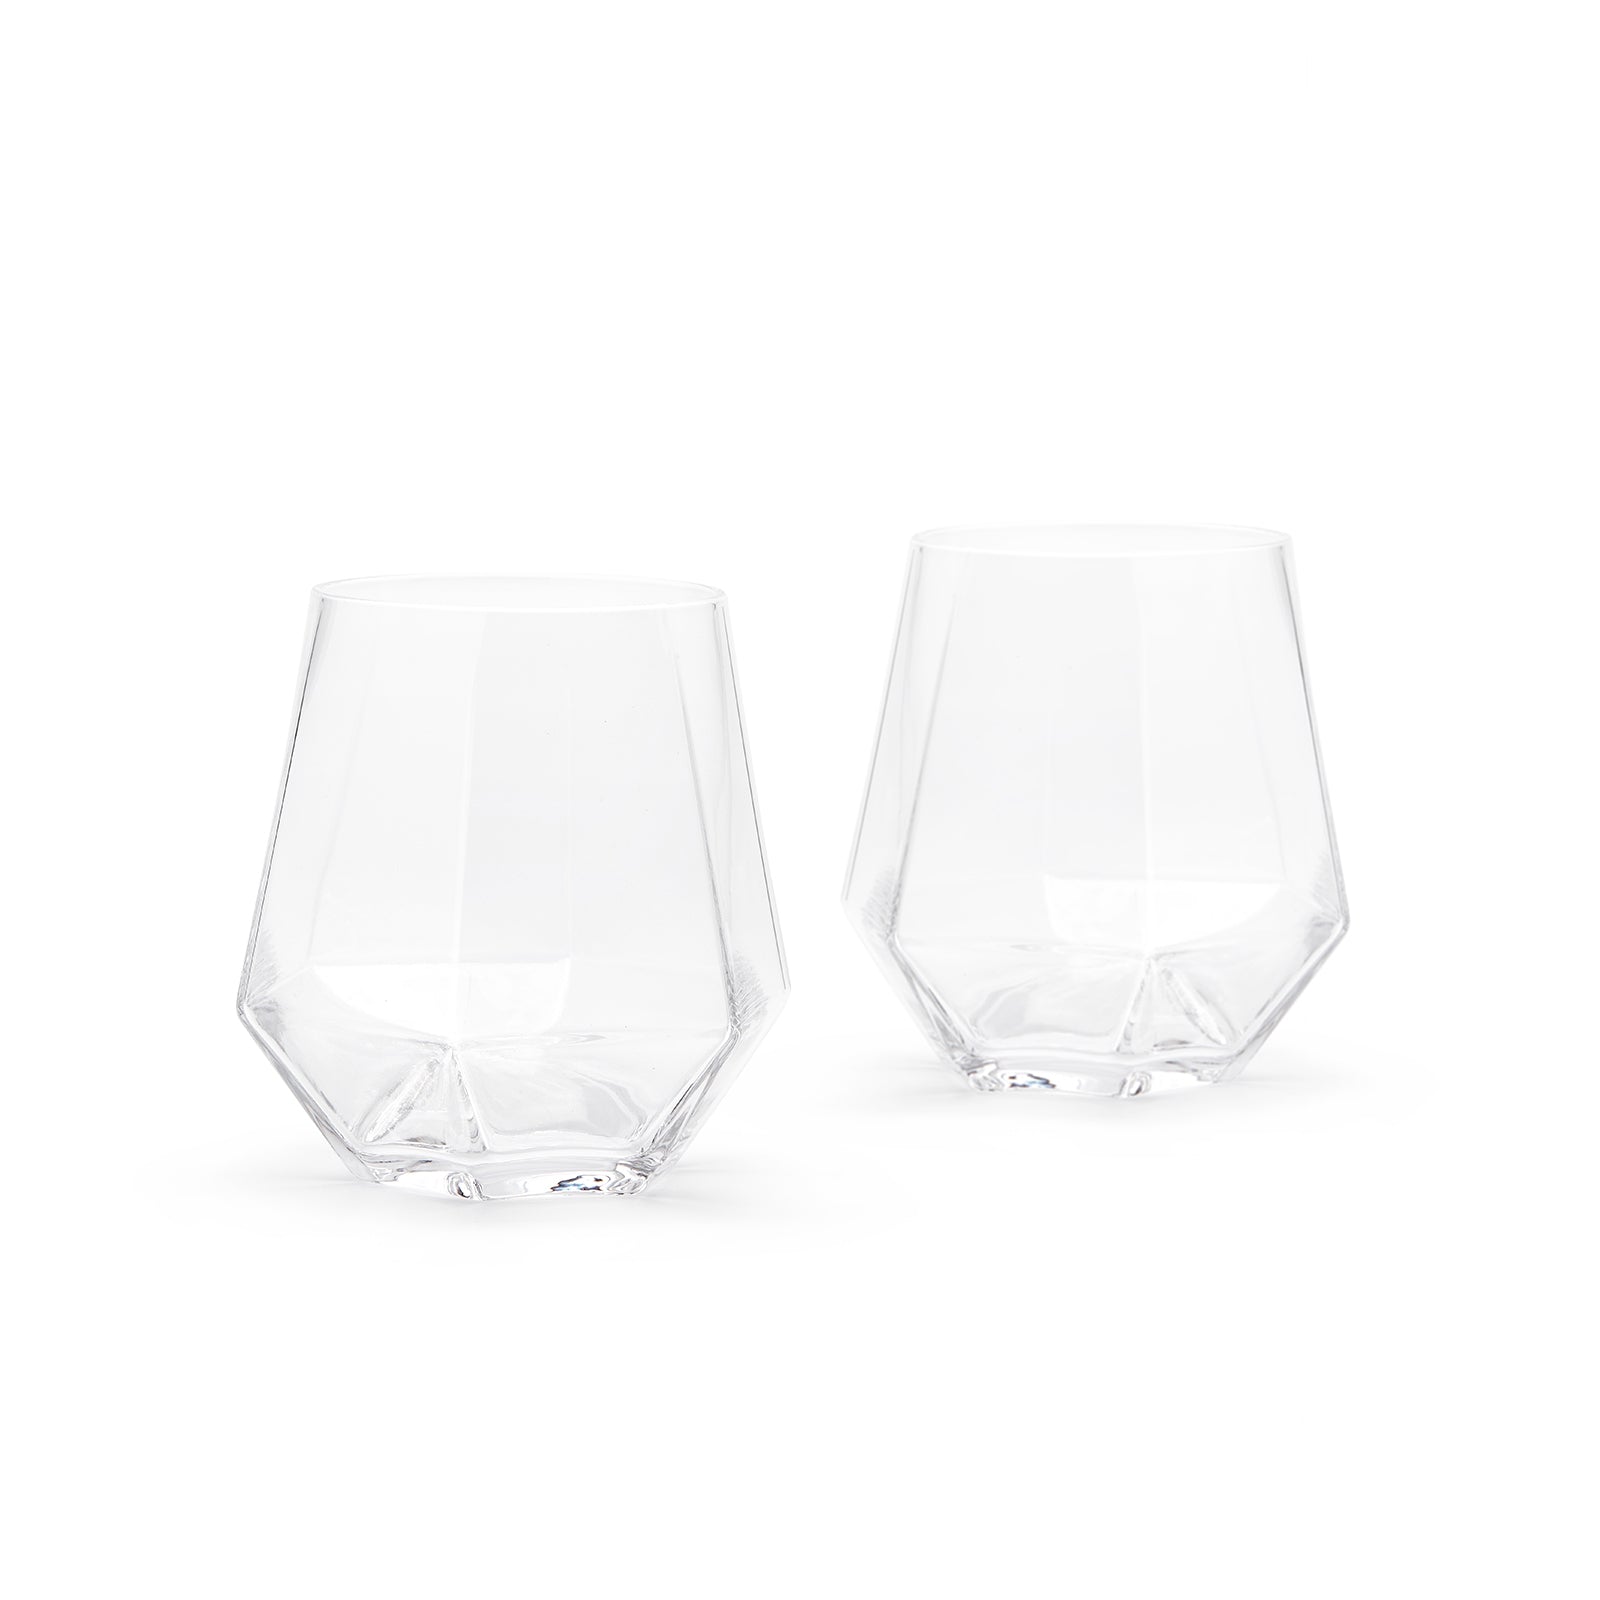 Radient crystal glasses (set of 2) - Urban Nest